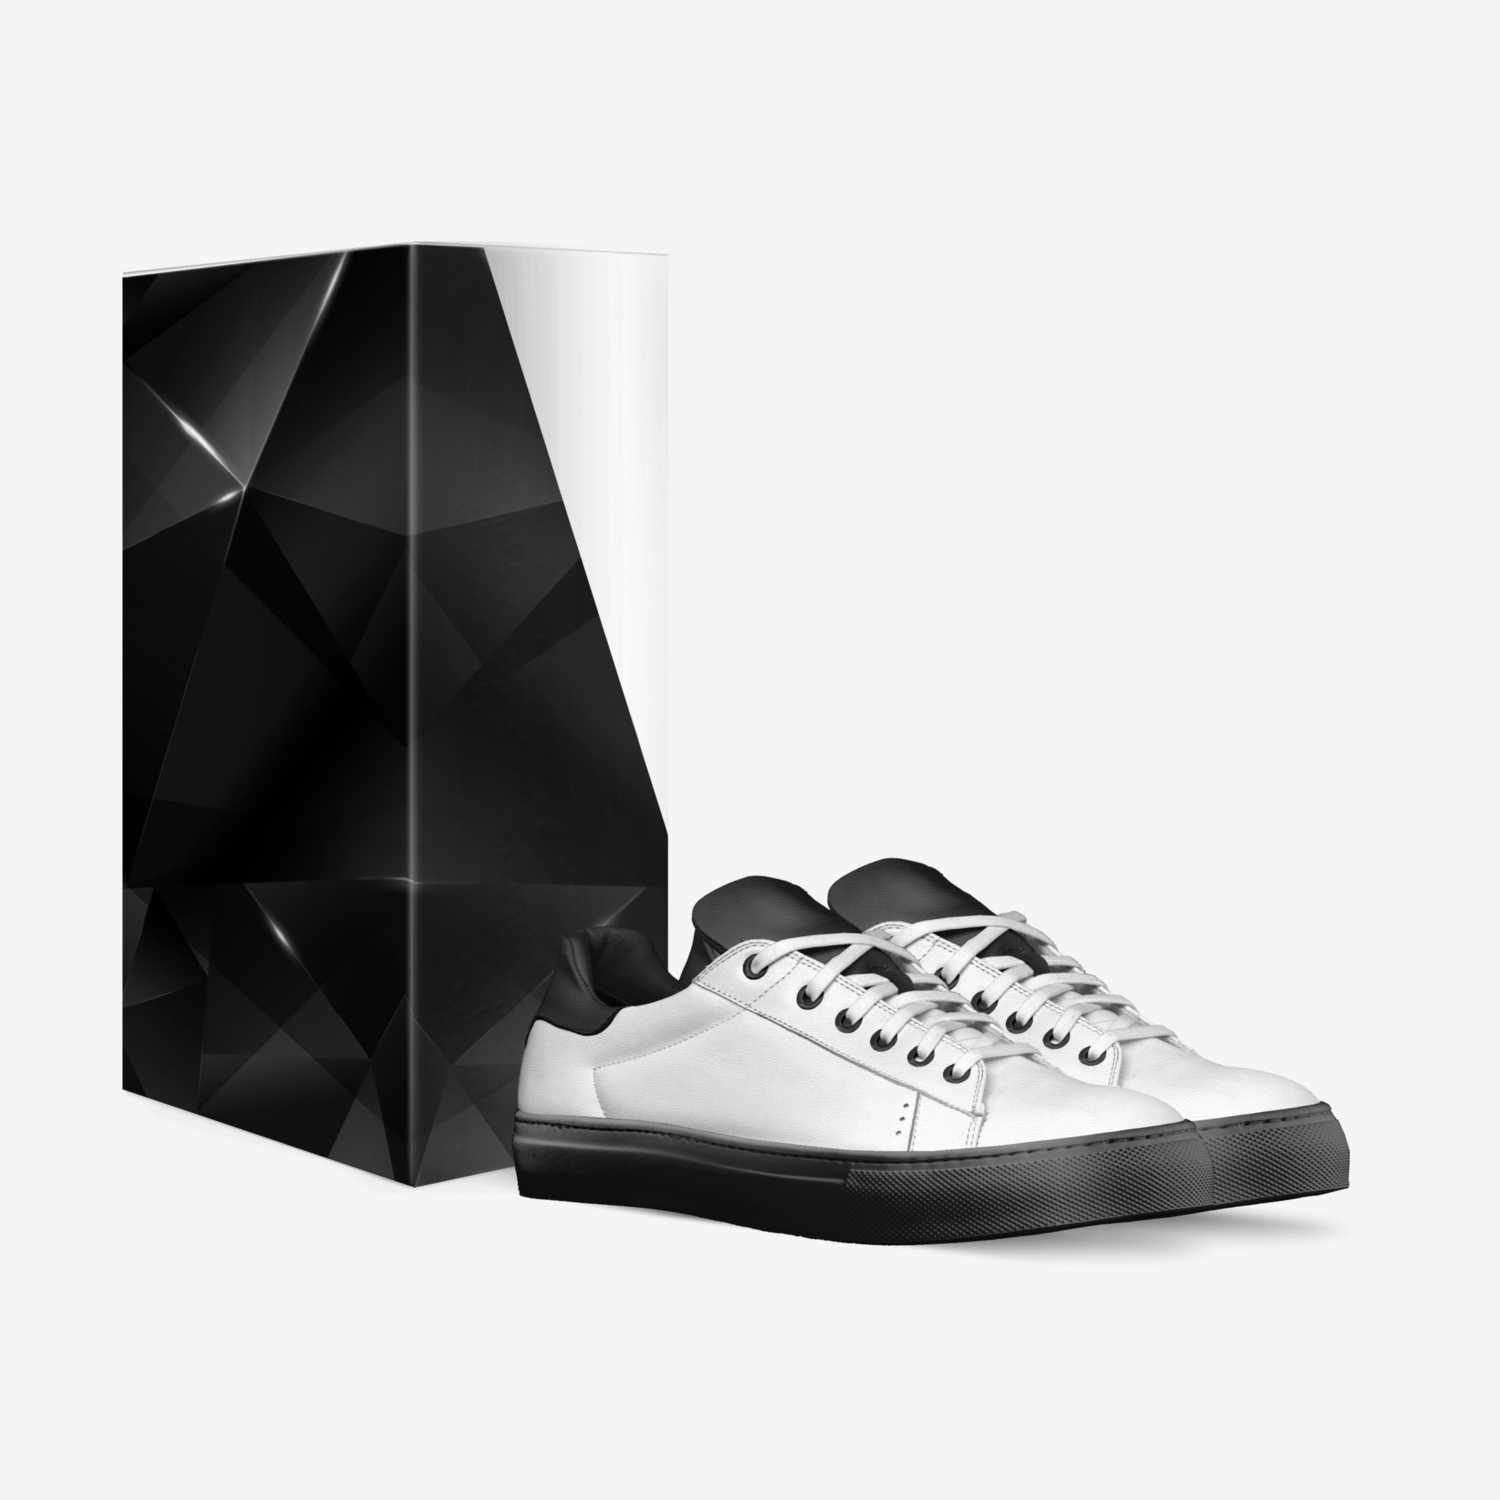 aj1 custom made in Italy shoes by Alex Jordan | Box view